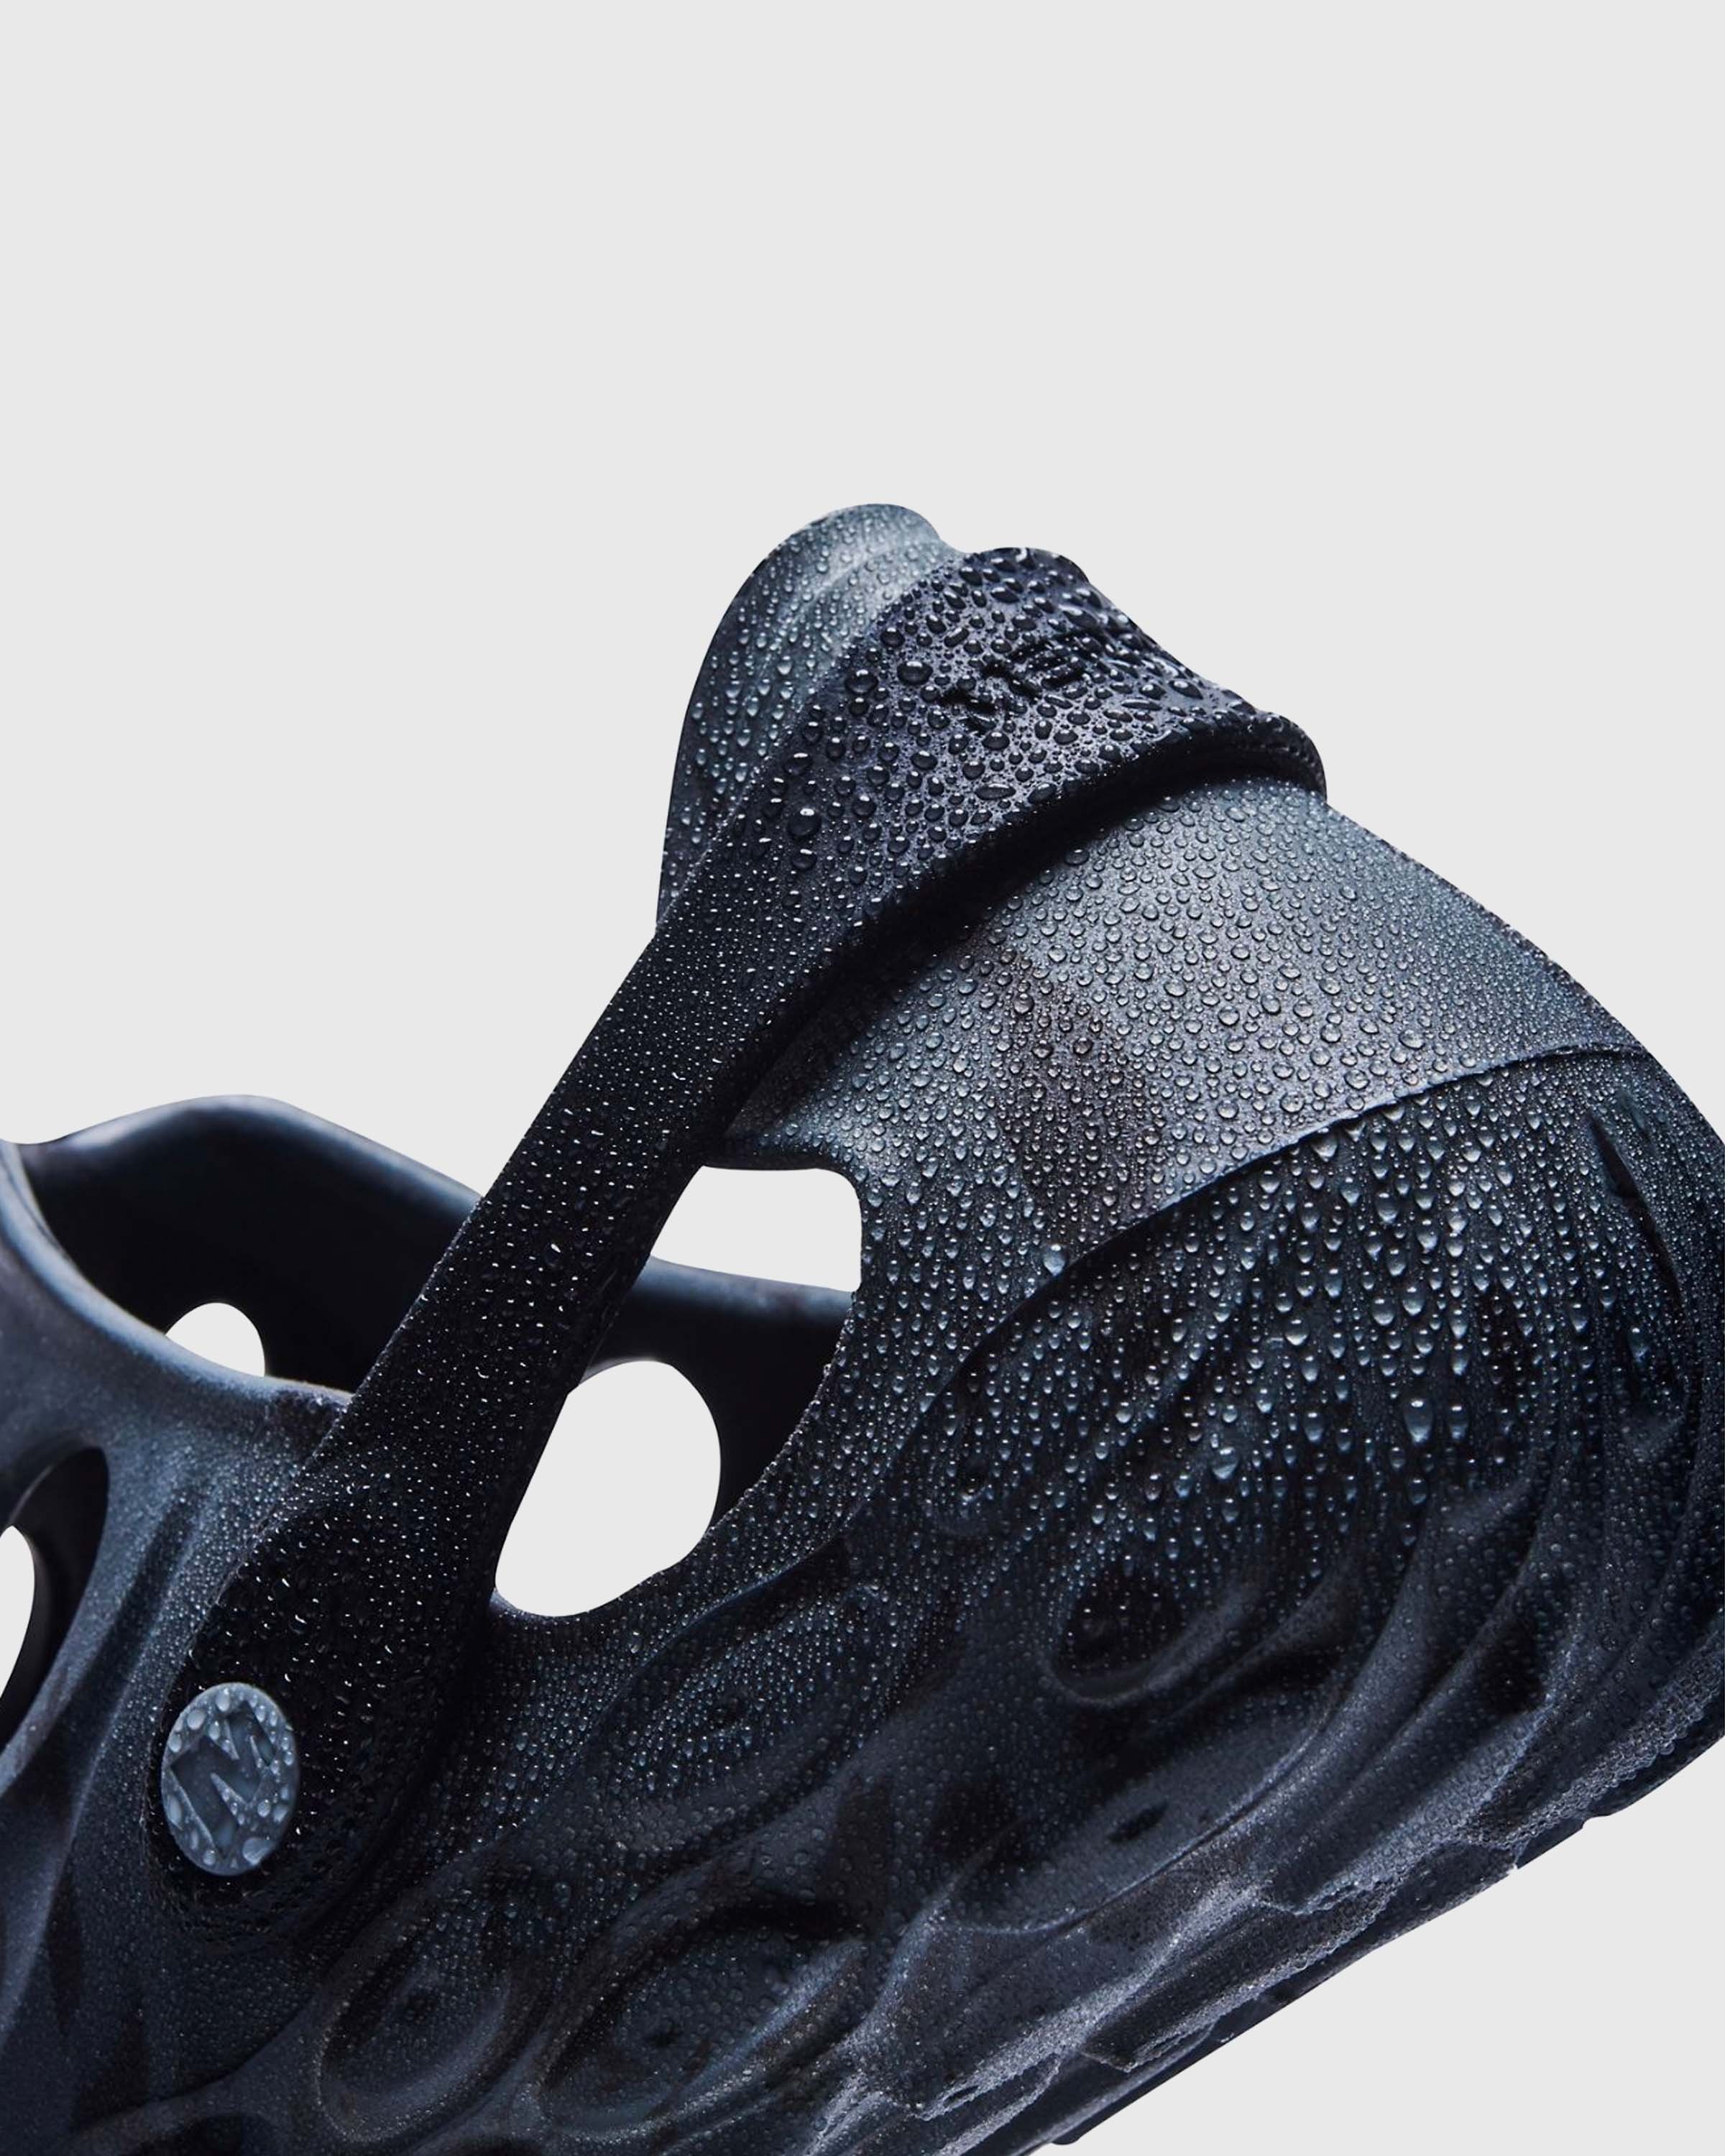 Merrell - Hydro Moc Black - Footwear - Black - Image 5